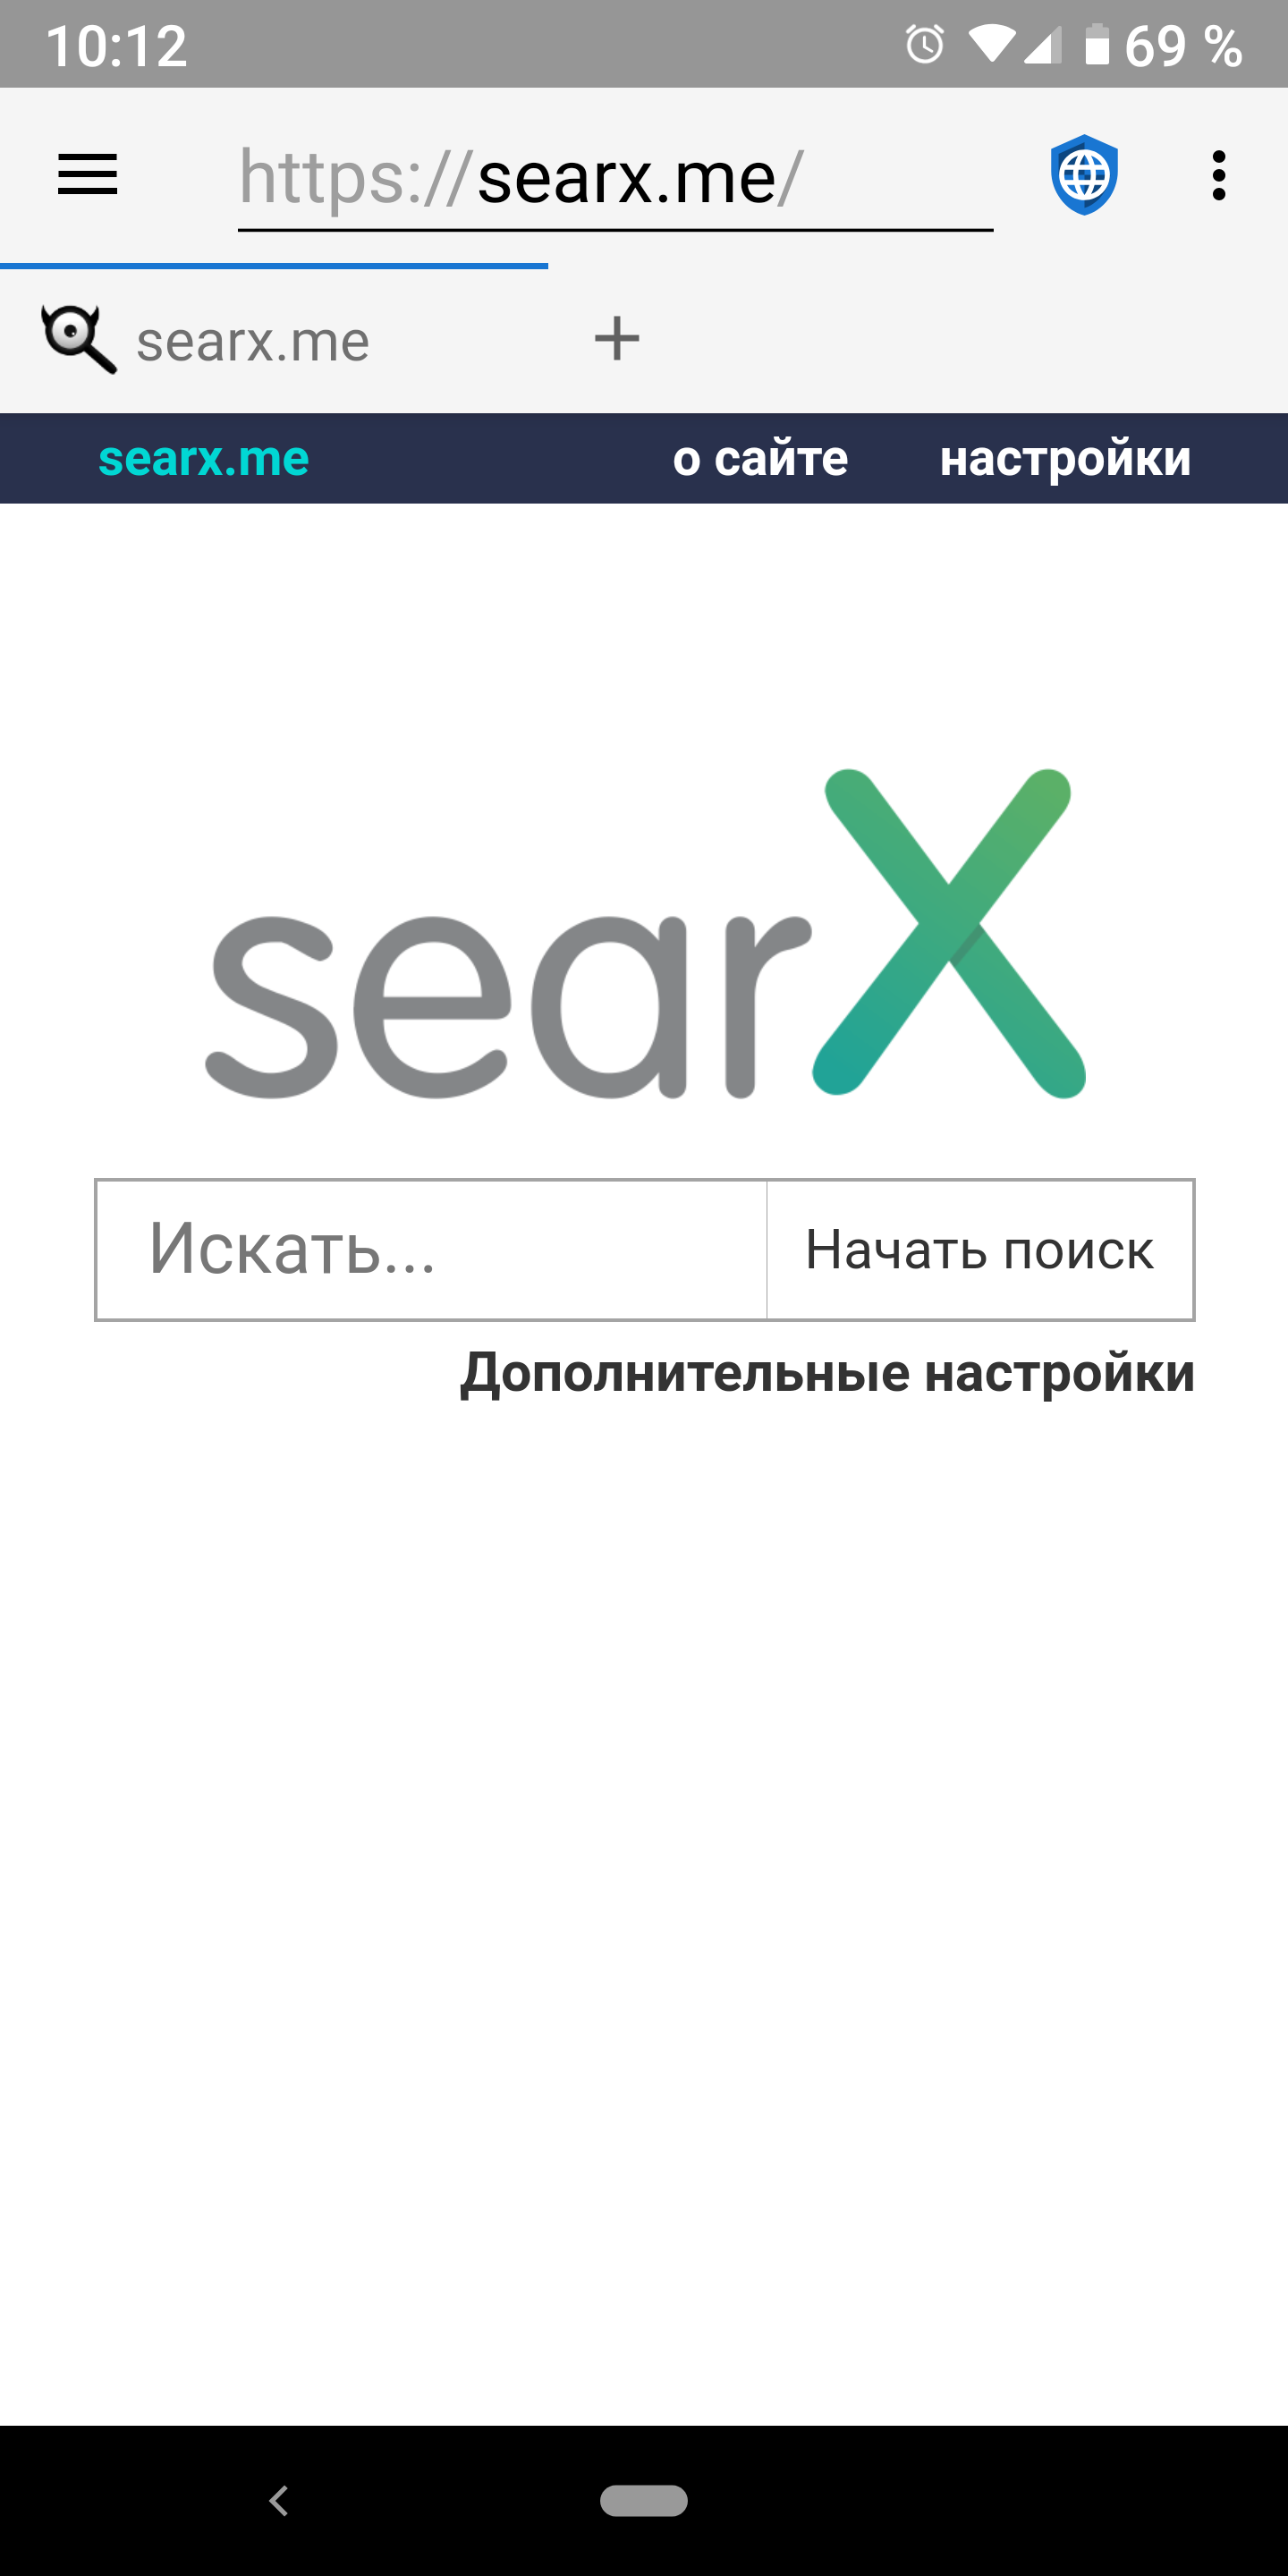 fastlane/metadata/android/ru-RU/images/phoneScreenshots/01-Homepage.png